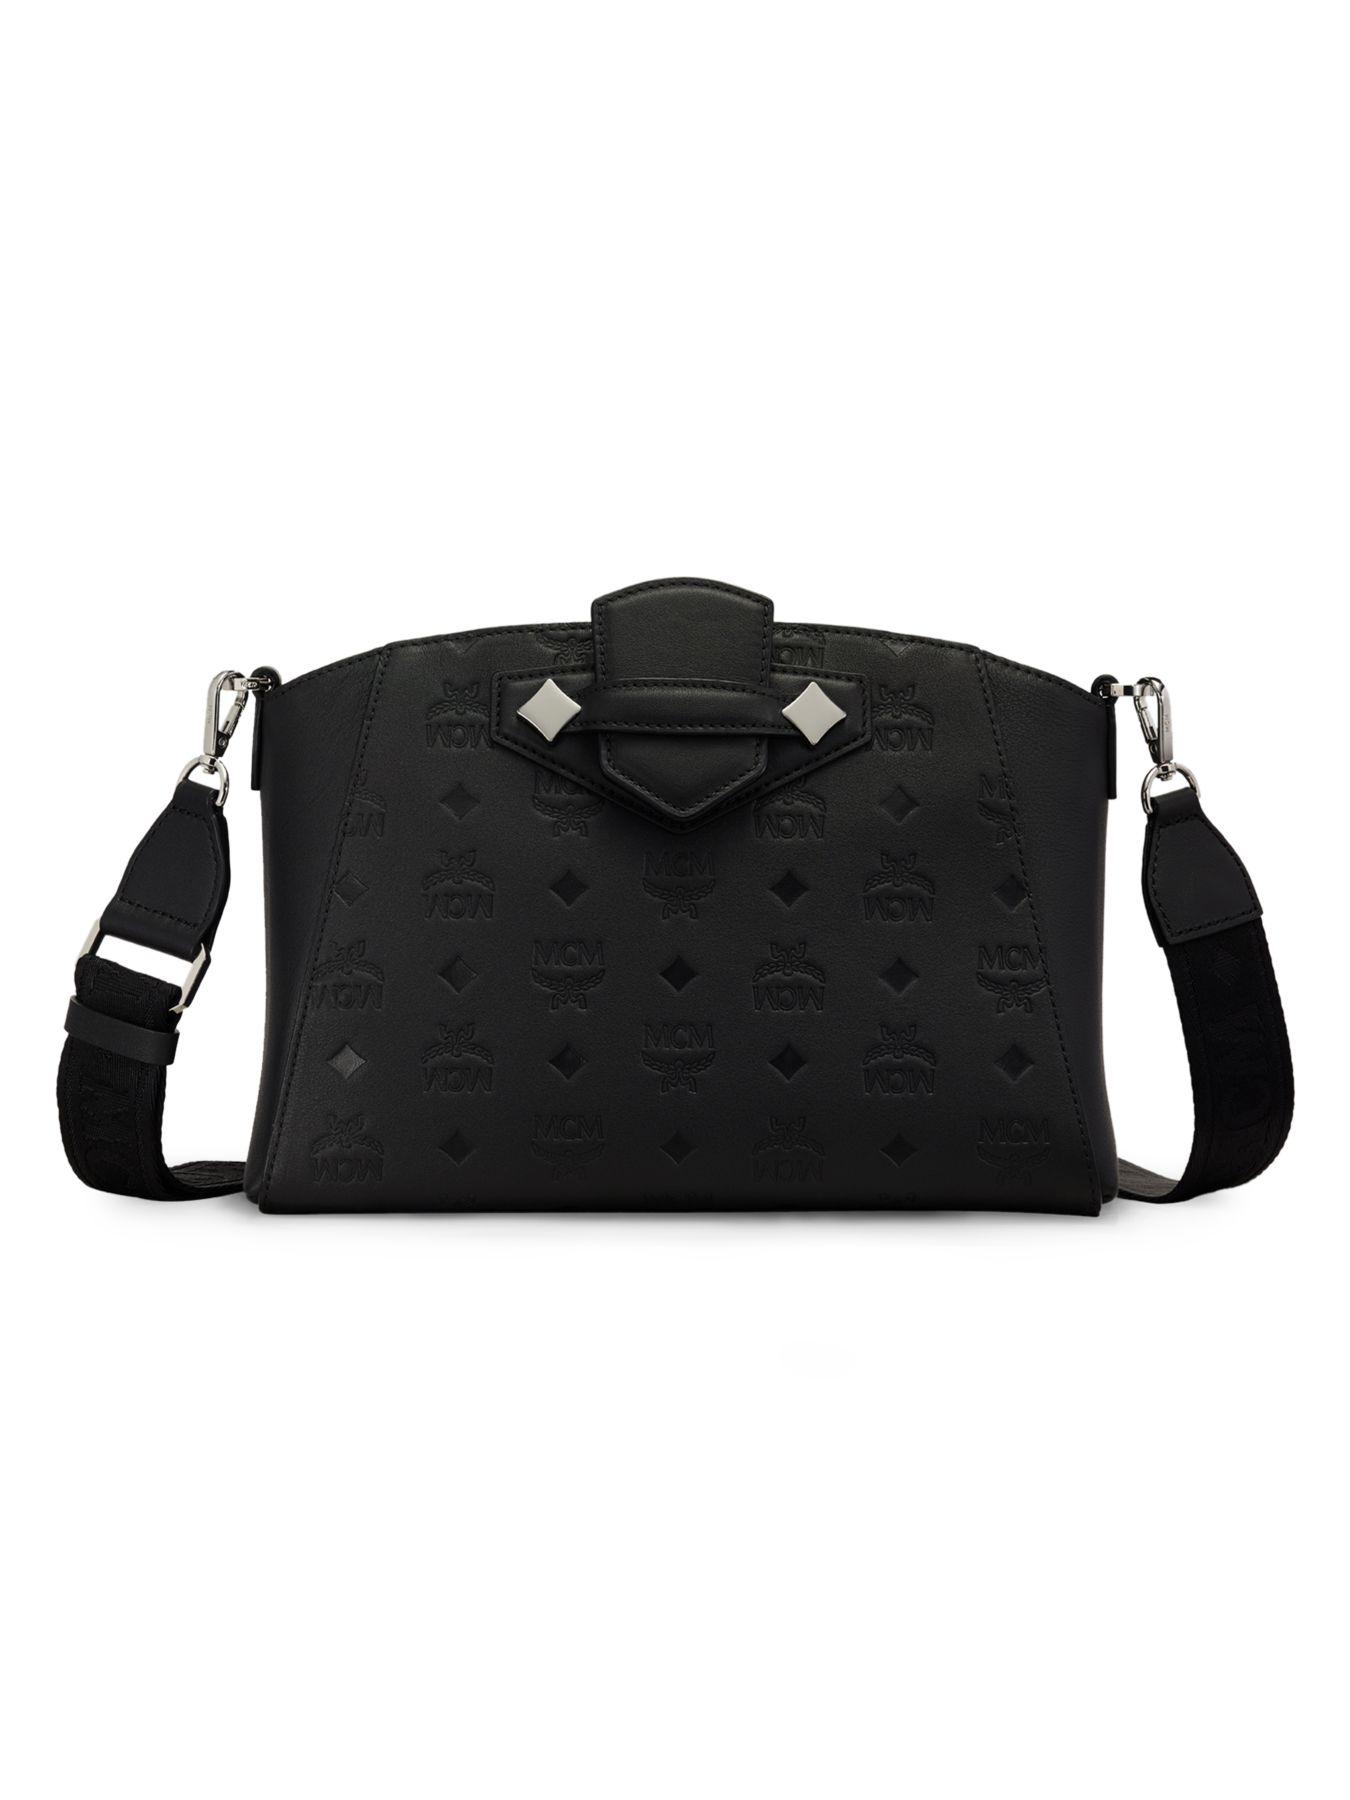 MCM Small Essential Monogram Leather Crossbody Bag in Black - Save 60% - Lyst